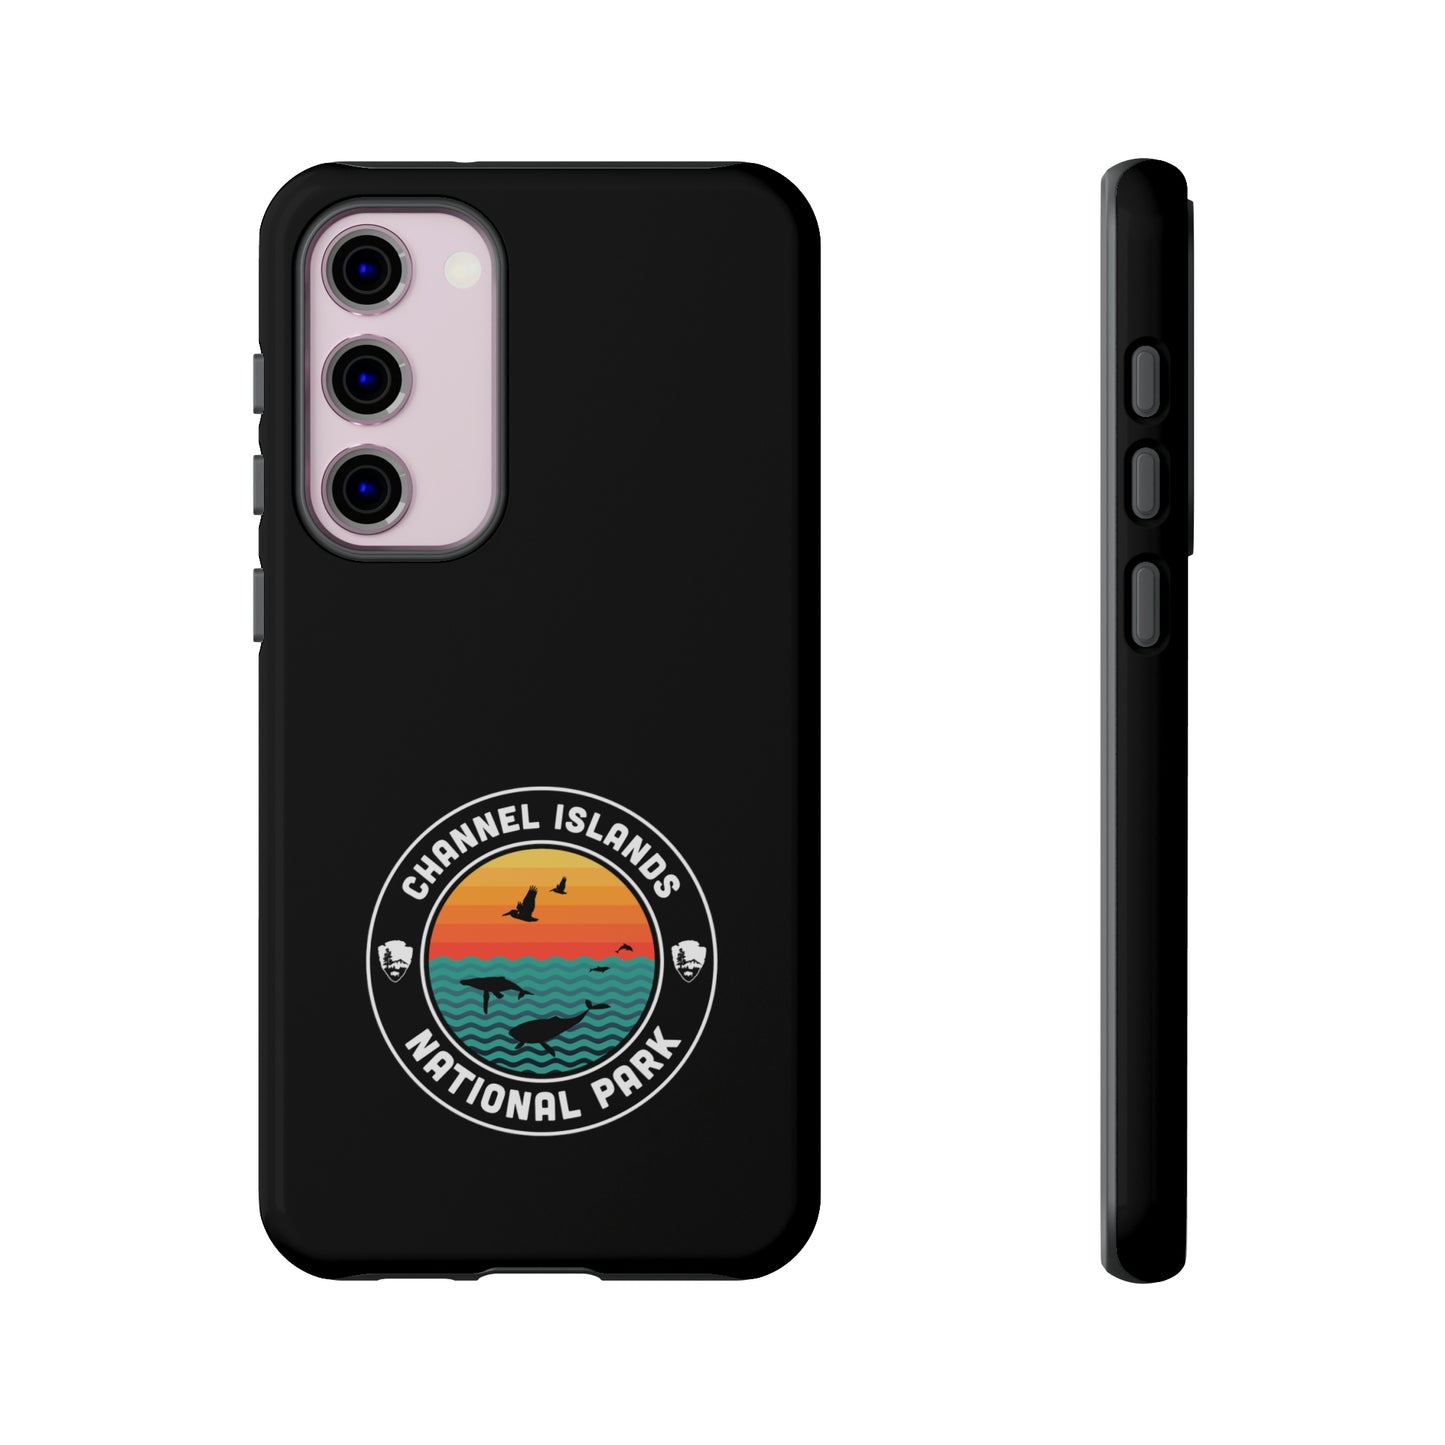 Channel Islands National Park Phone Case - Round Emblem Design